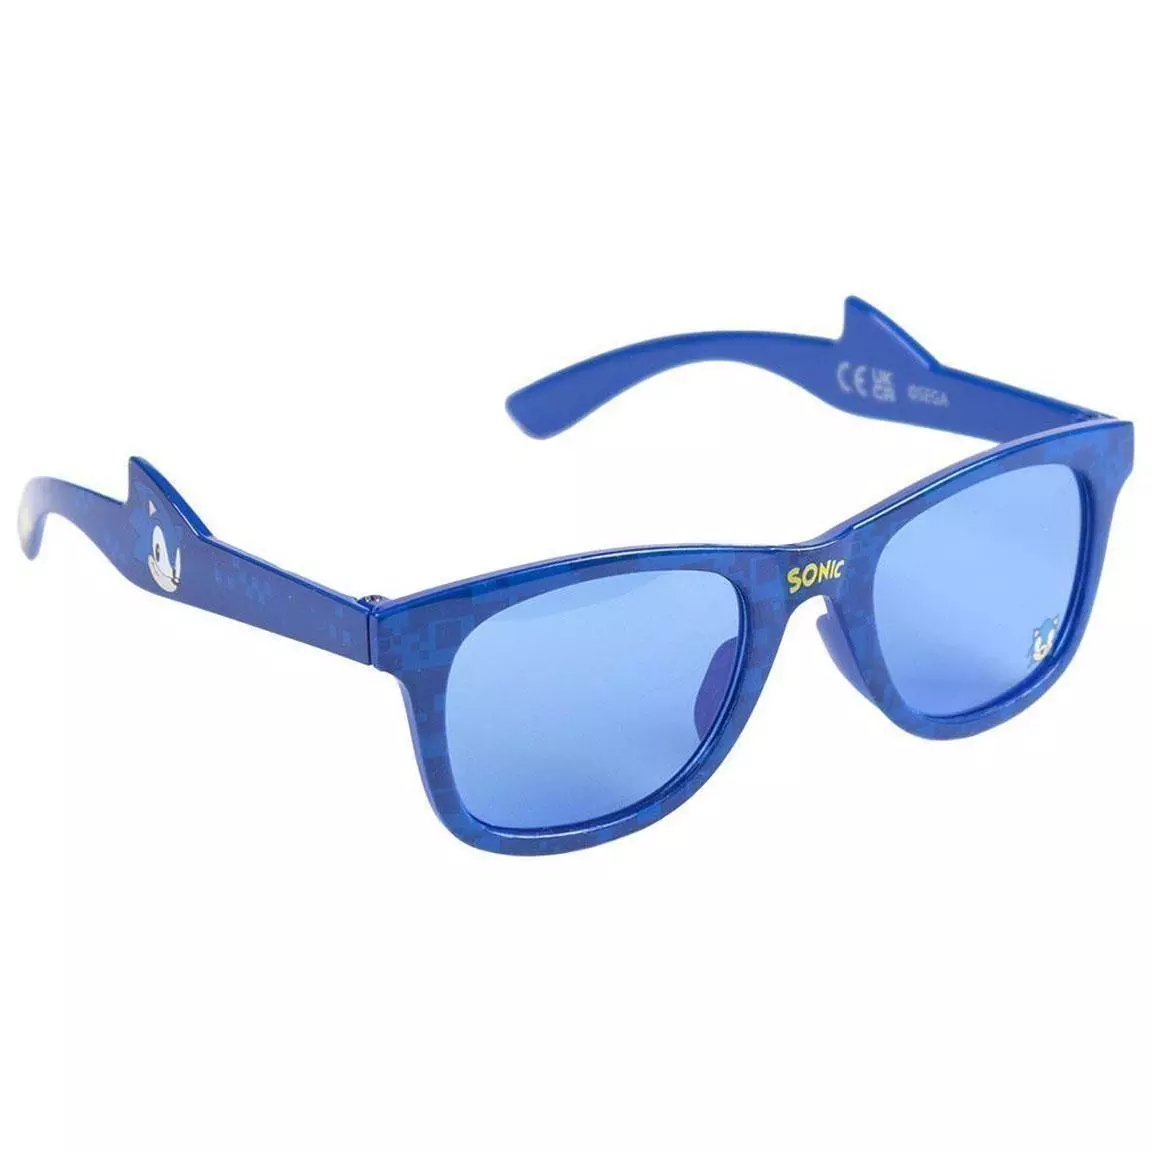 Sonic The Hedgehog Blue Classic Design Junior Sunglasses